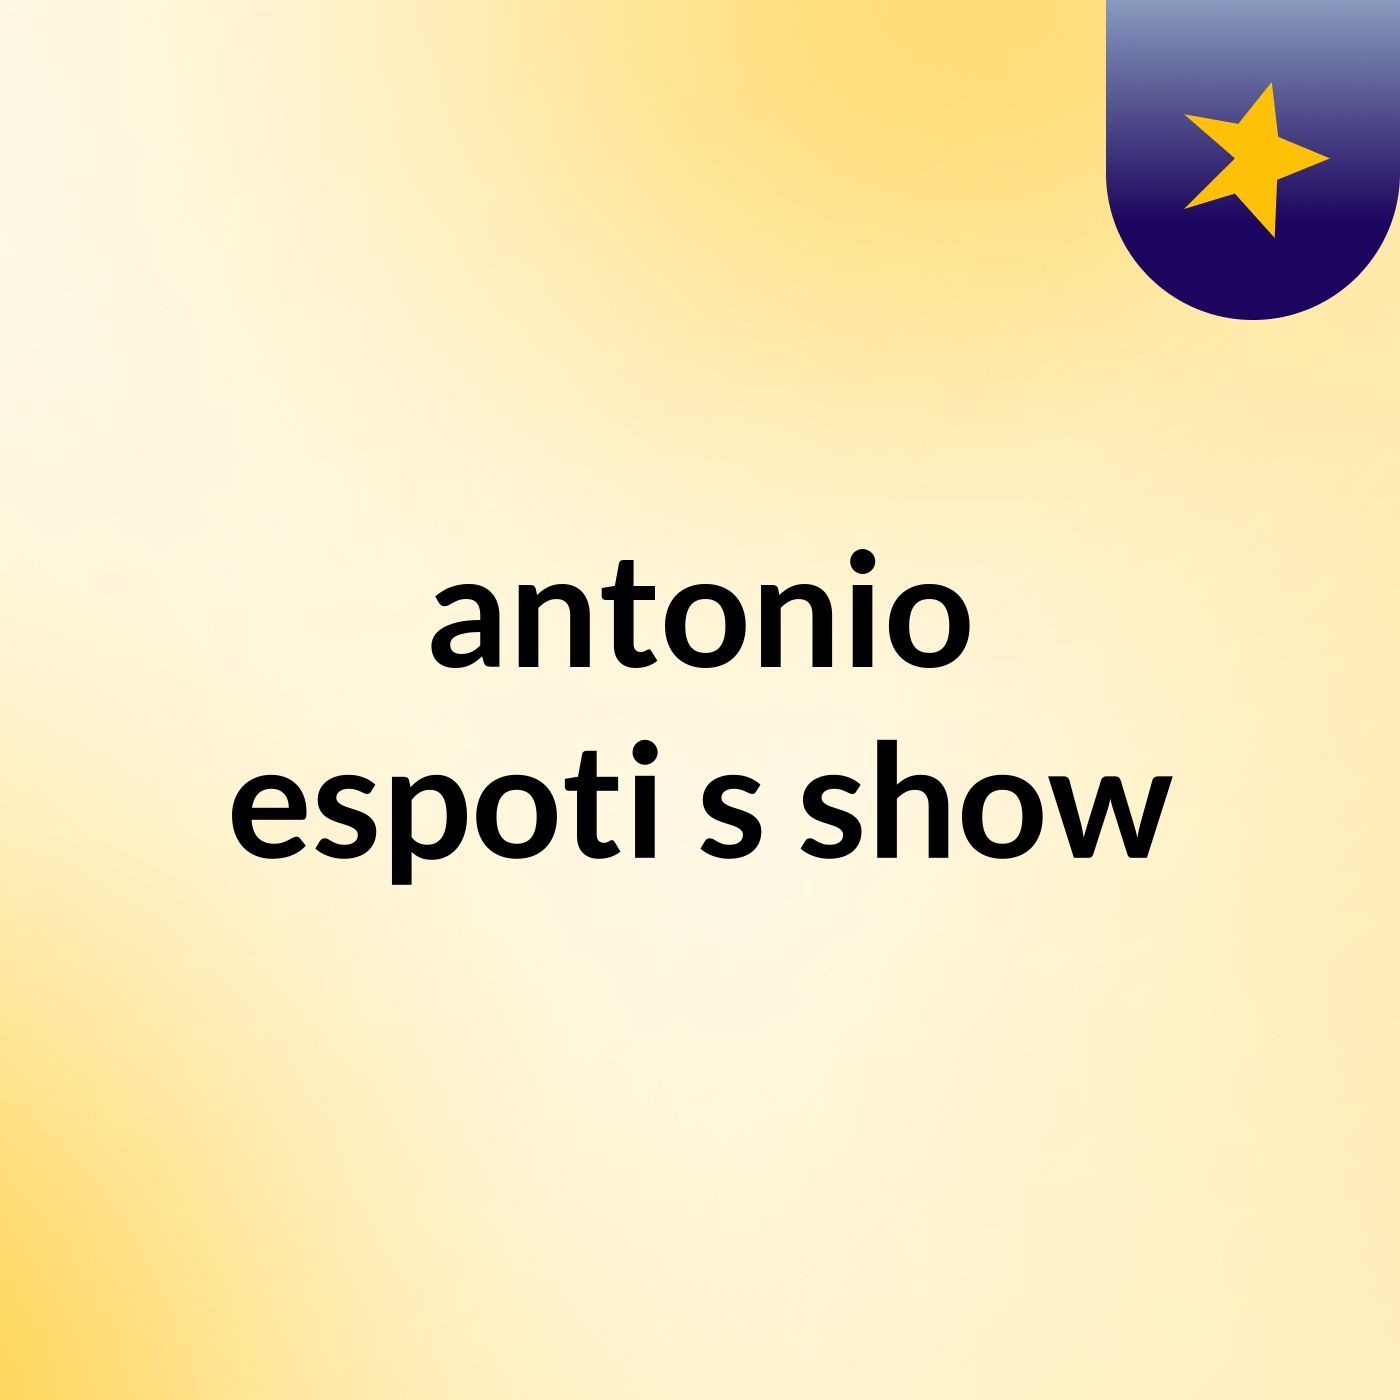 antonio espoti's show